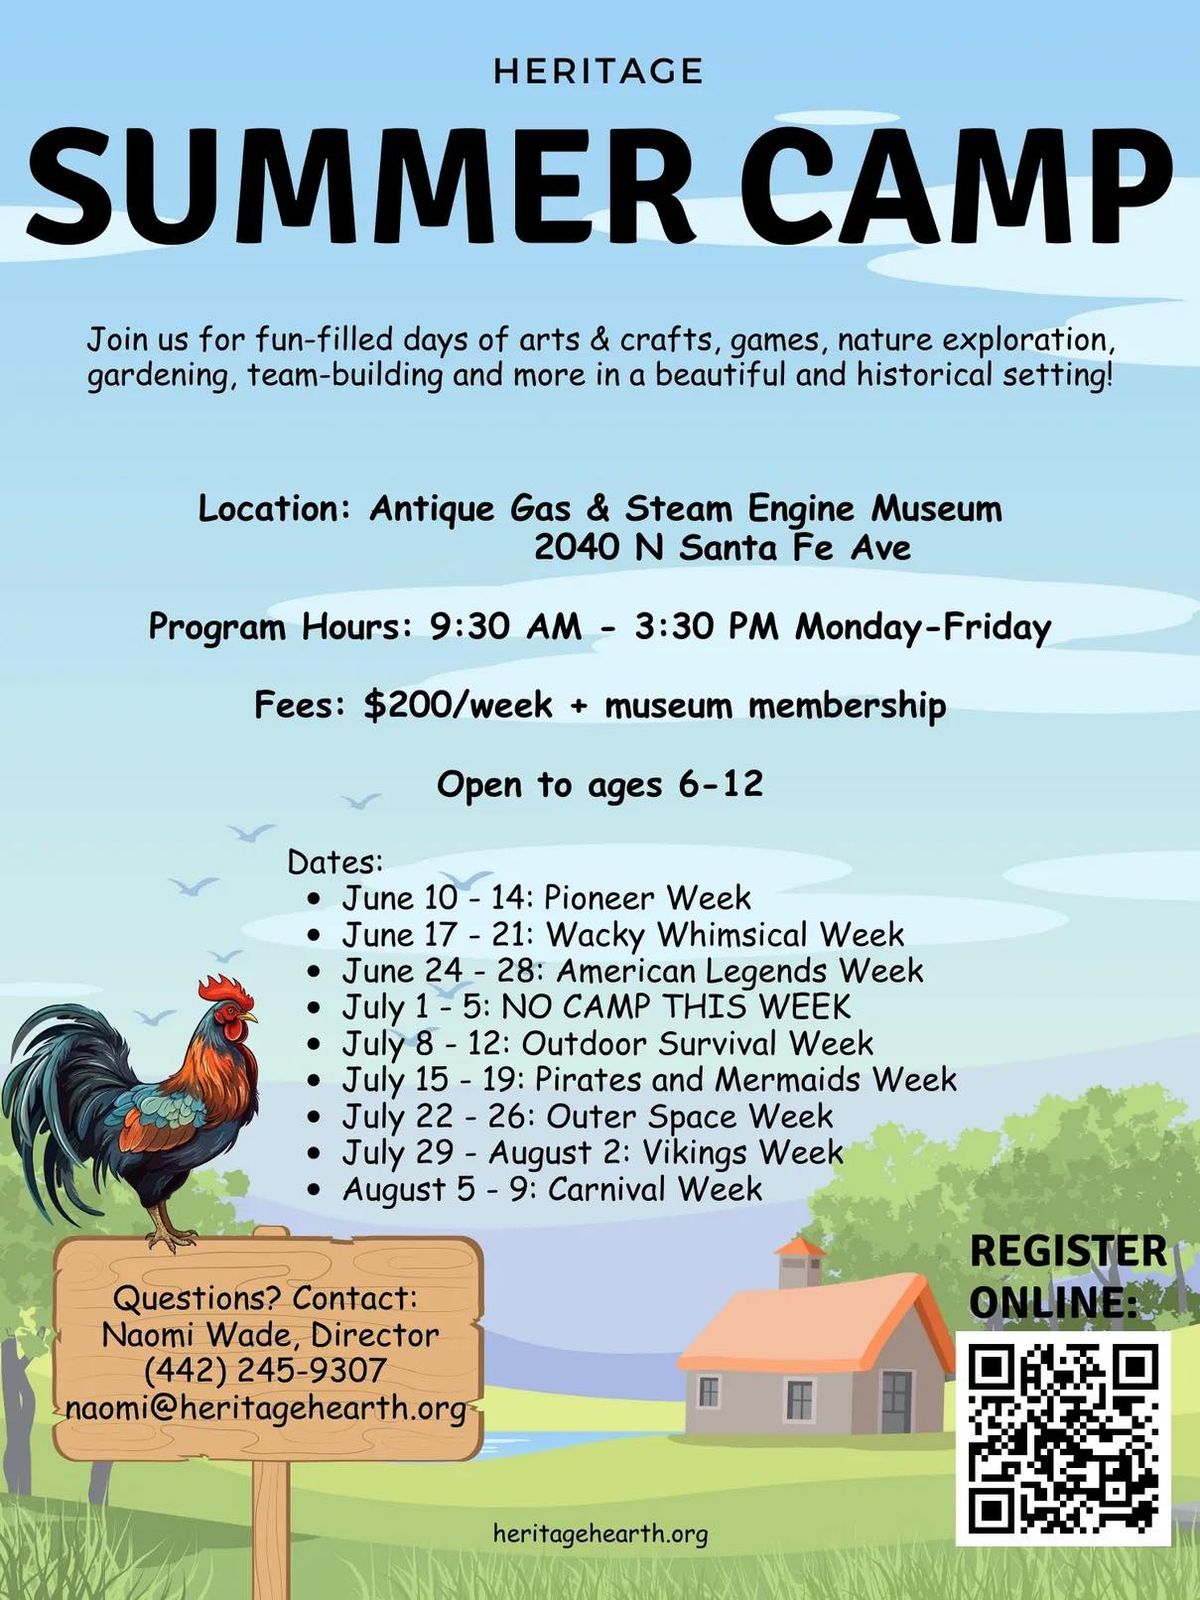 Heritage Summer Camp